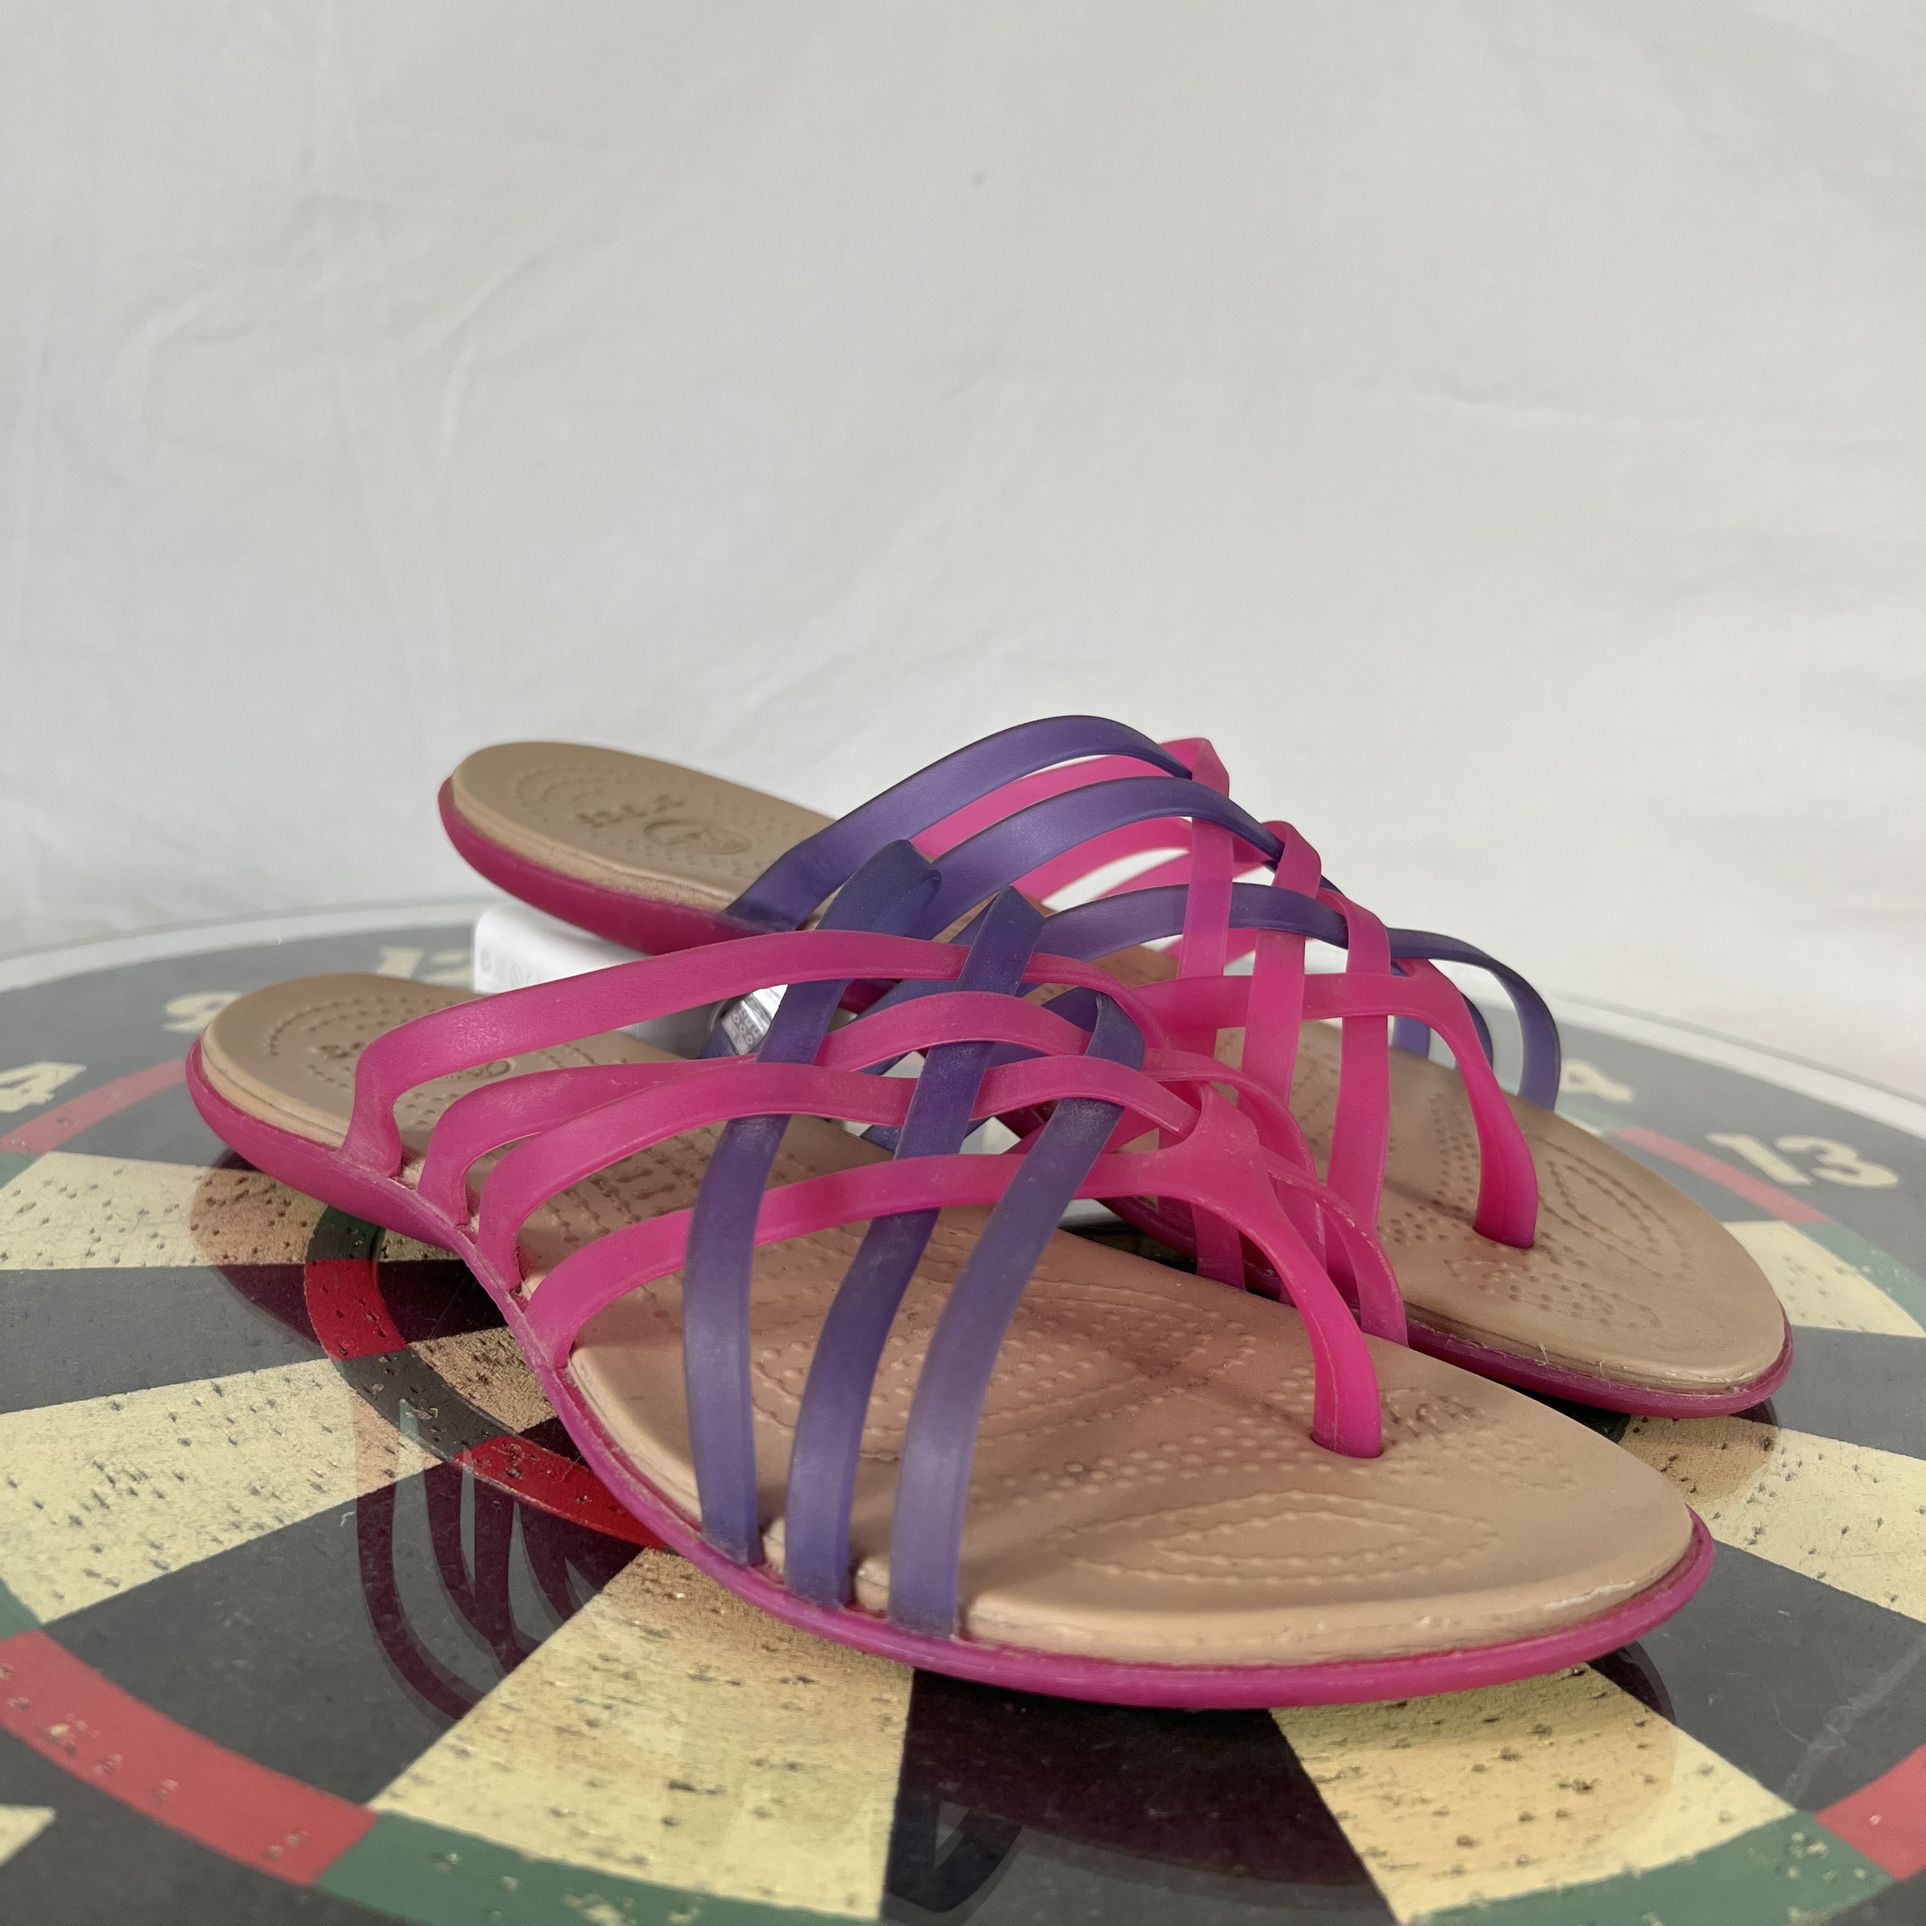 Crocs Huarache Flip Flops Jelly Strappy Thong Sandals Pink Purple Women’s Size 9